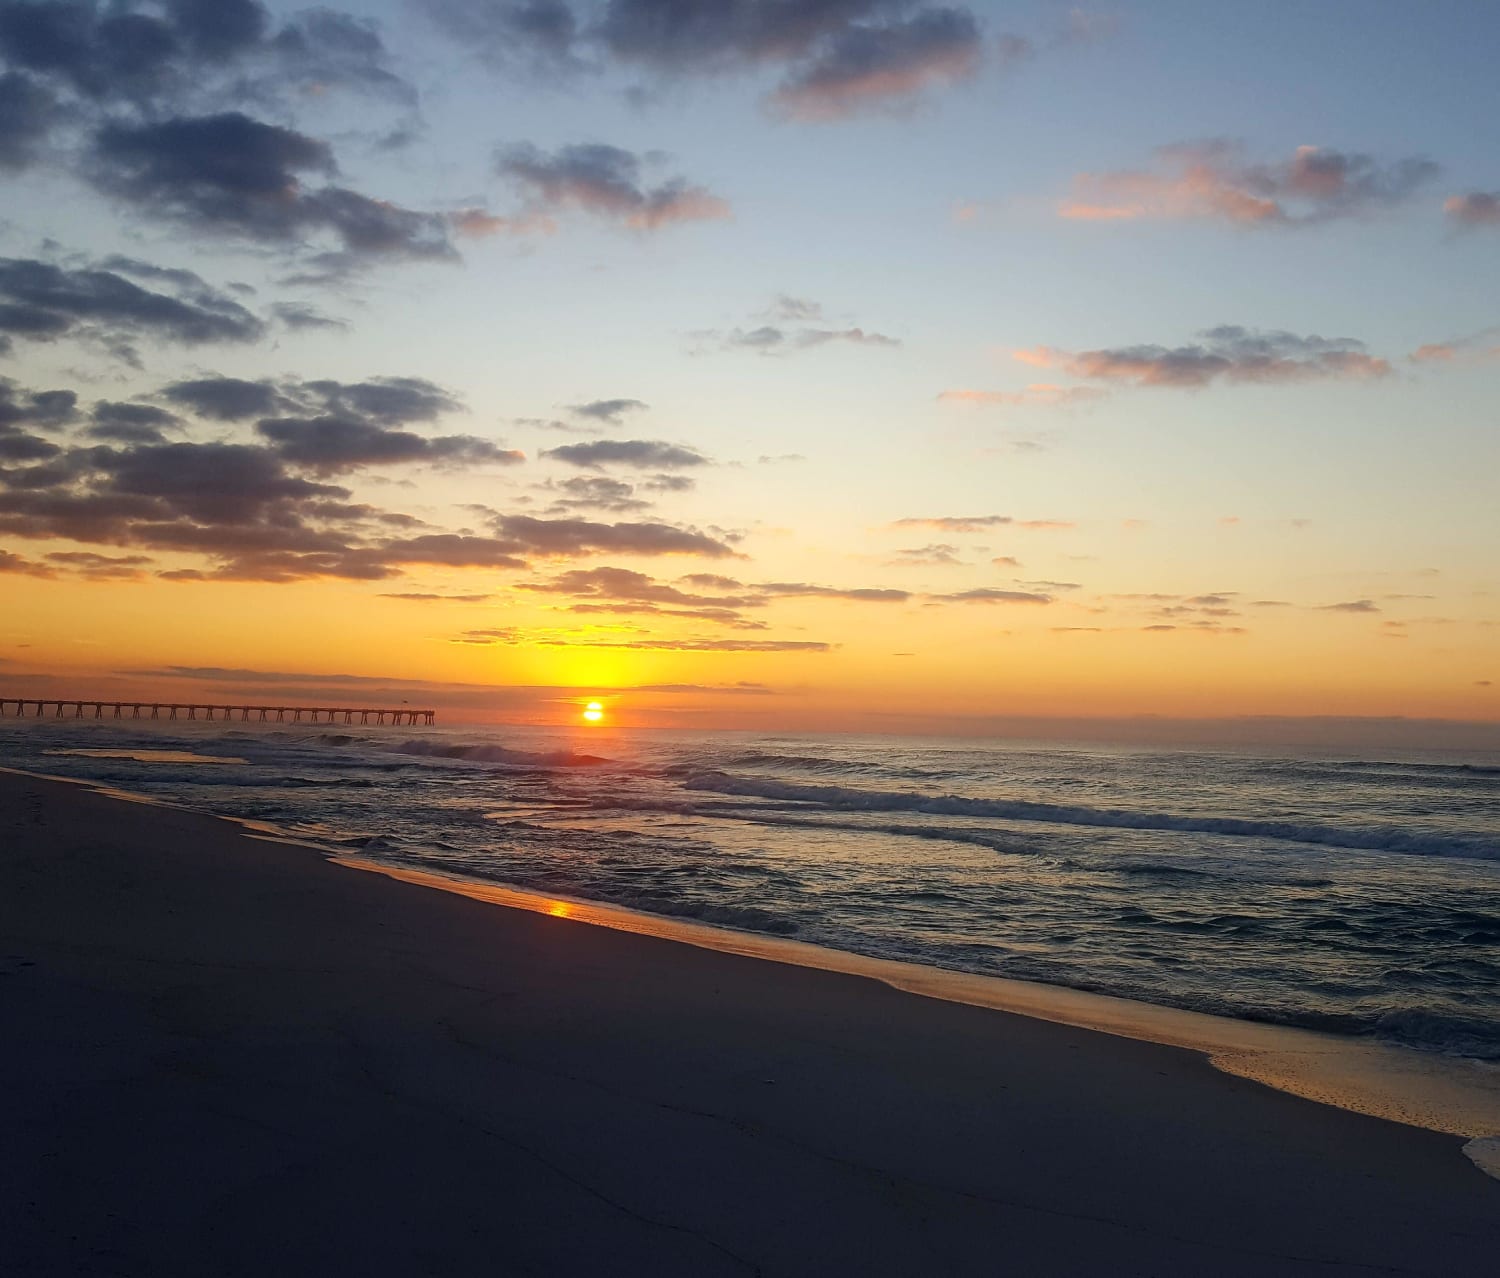 Sunrise @ pensacola beach, start to a new day.